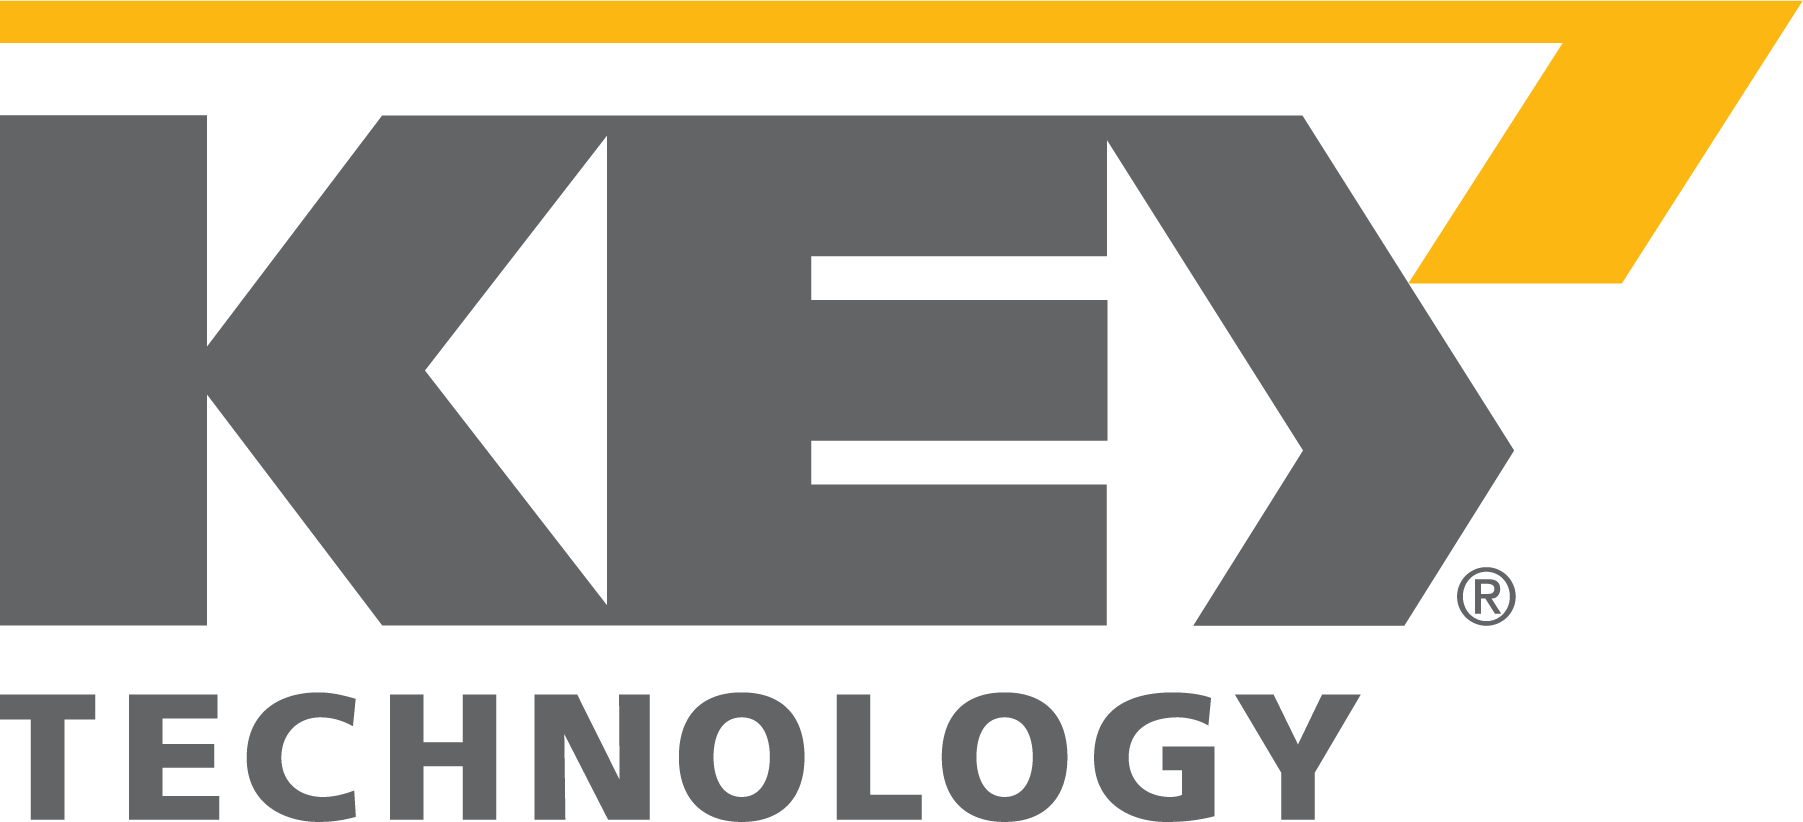 Key Technology Logo. 